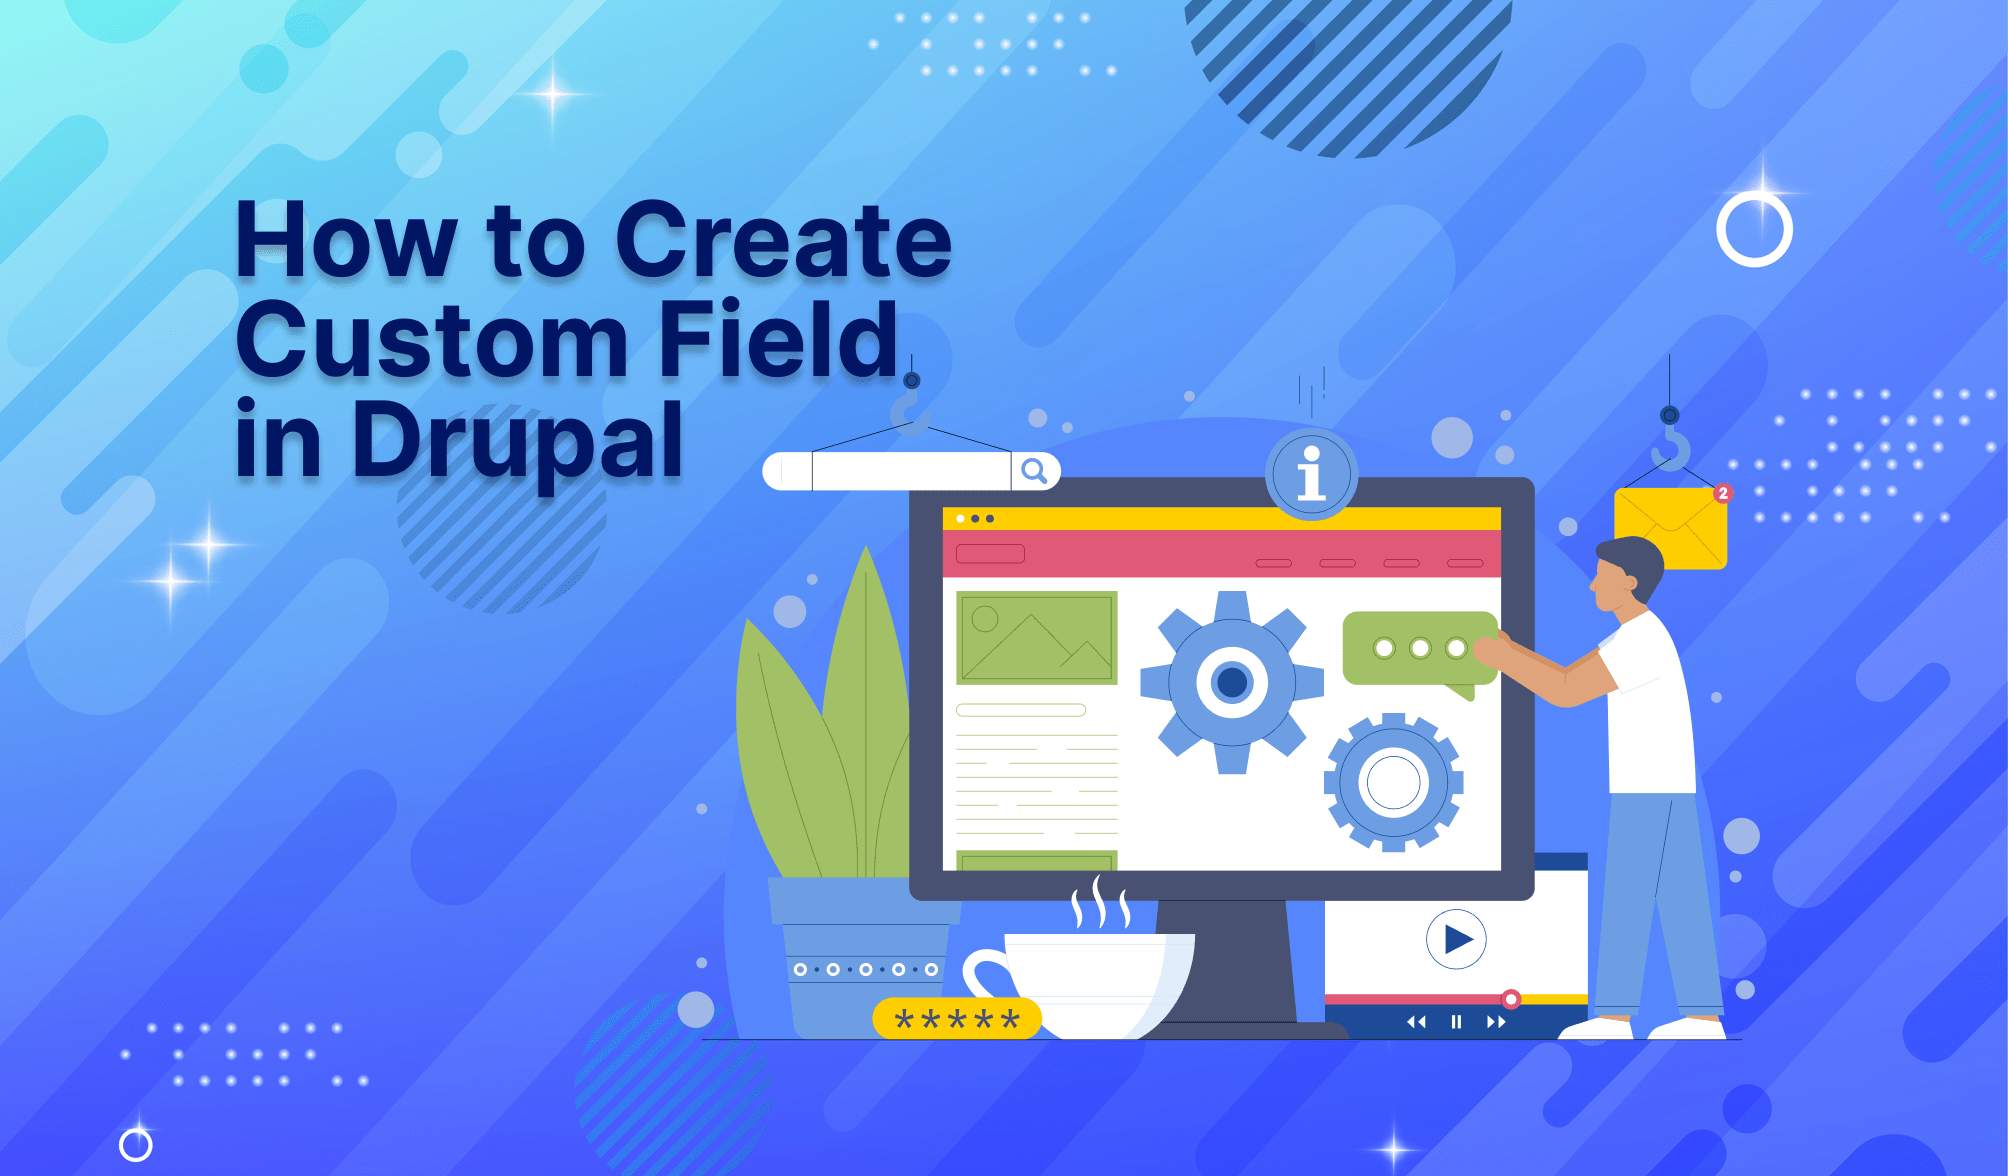 How to Create Custom Field in Drupal